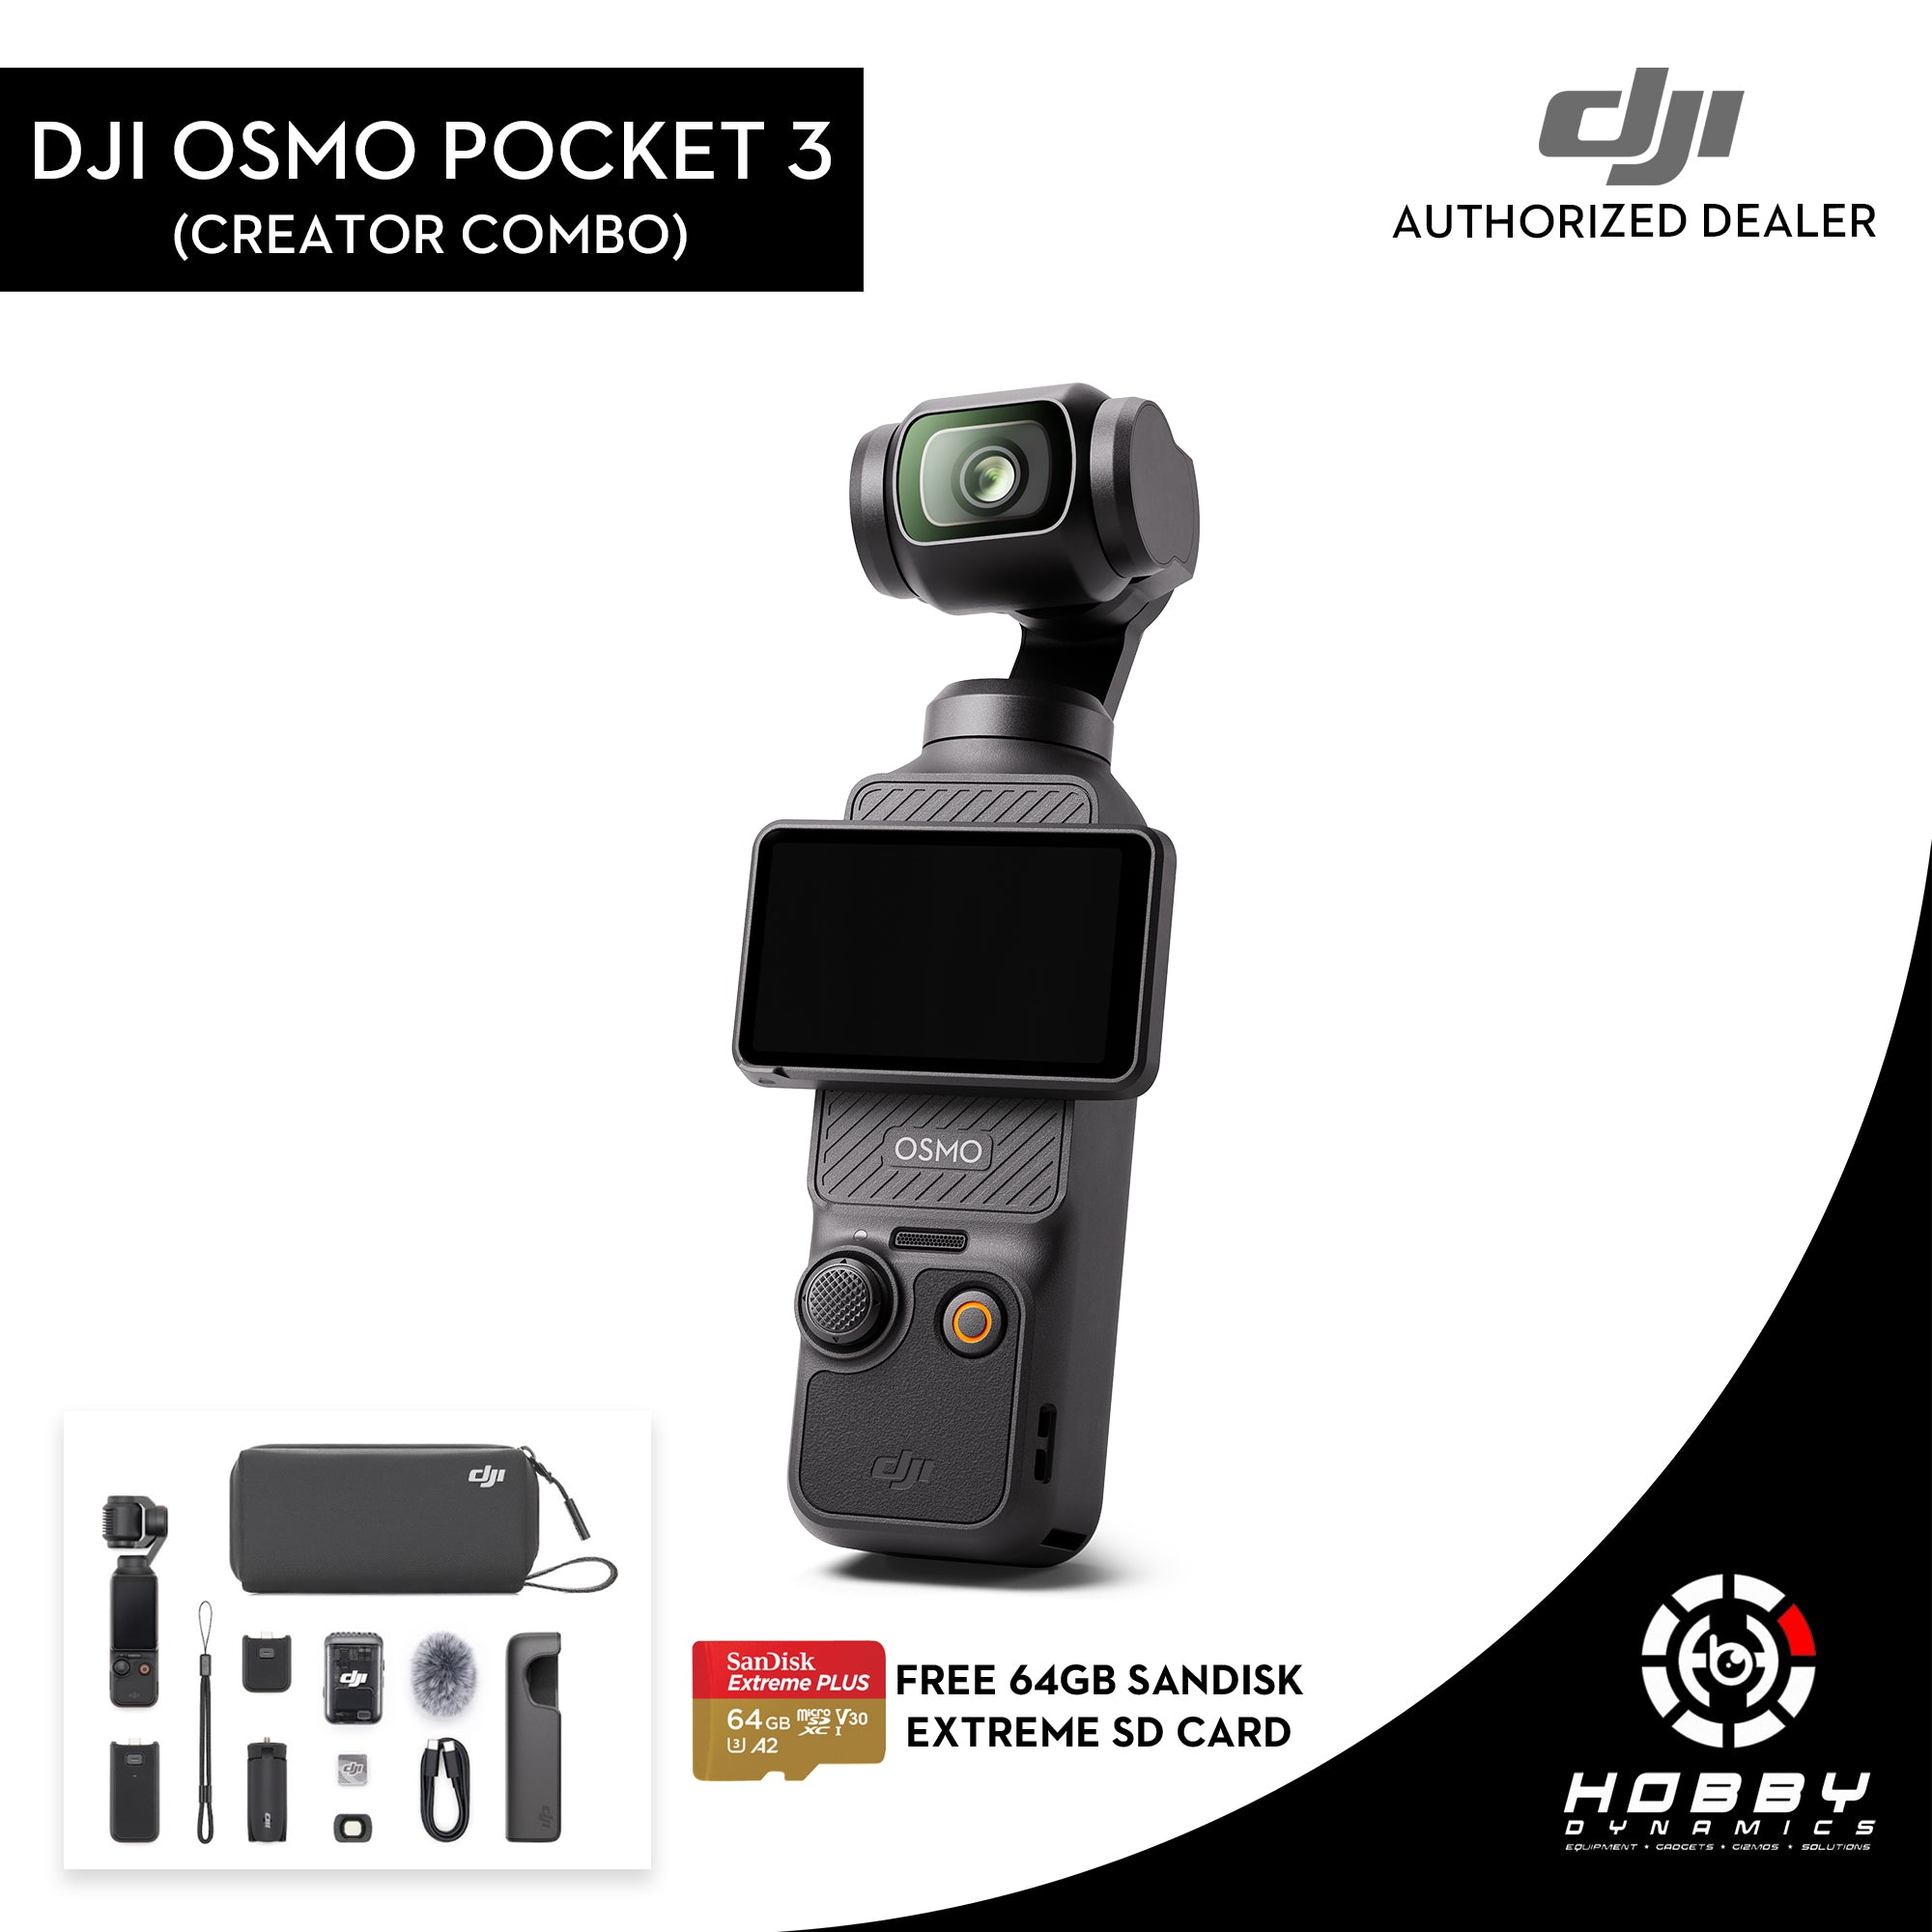 DJI Osmo Pocket 3 (Creator Combo) with FREE Sandisk 64GB Extreme